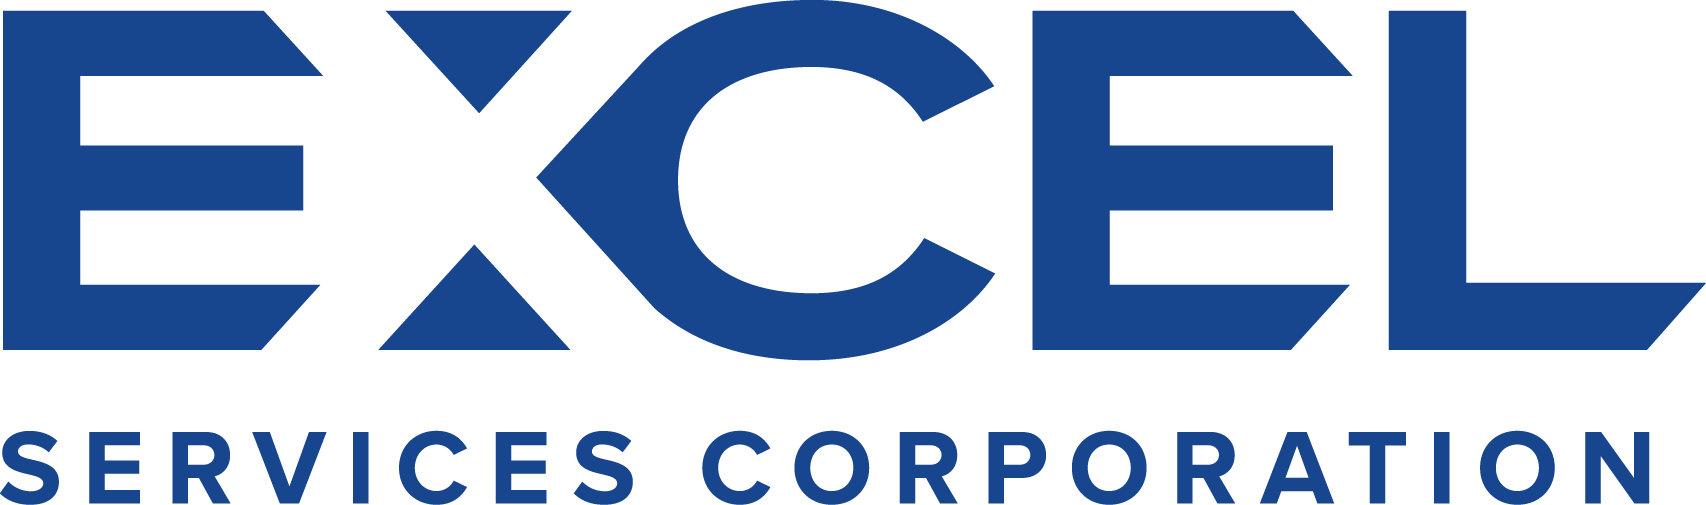 EXCEL Services Corporation logo